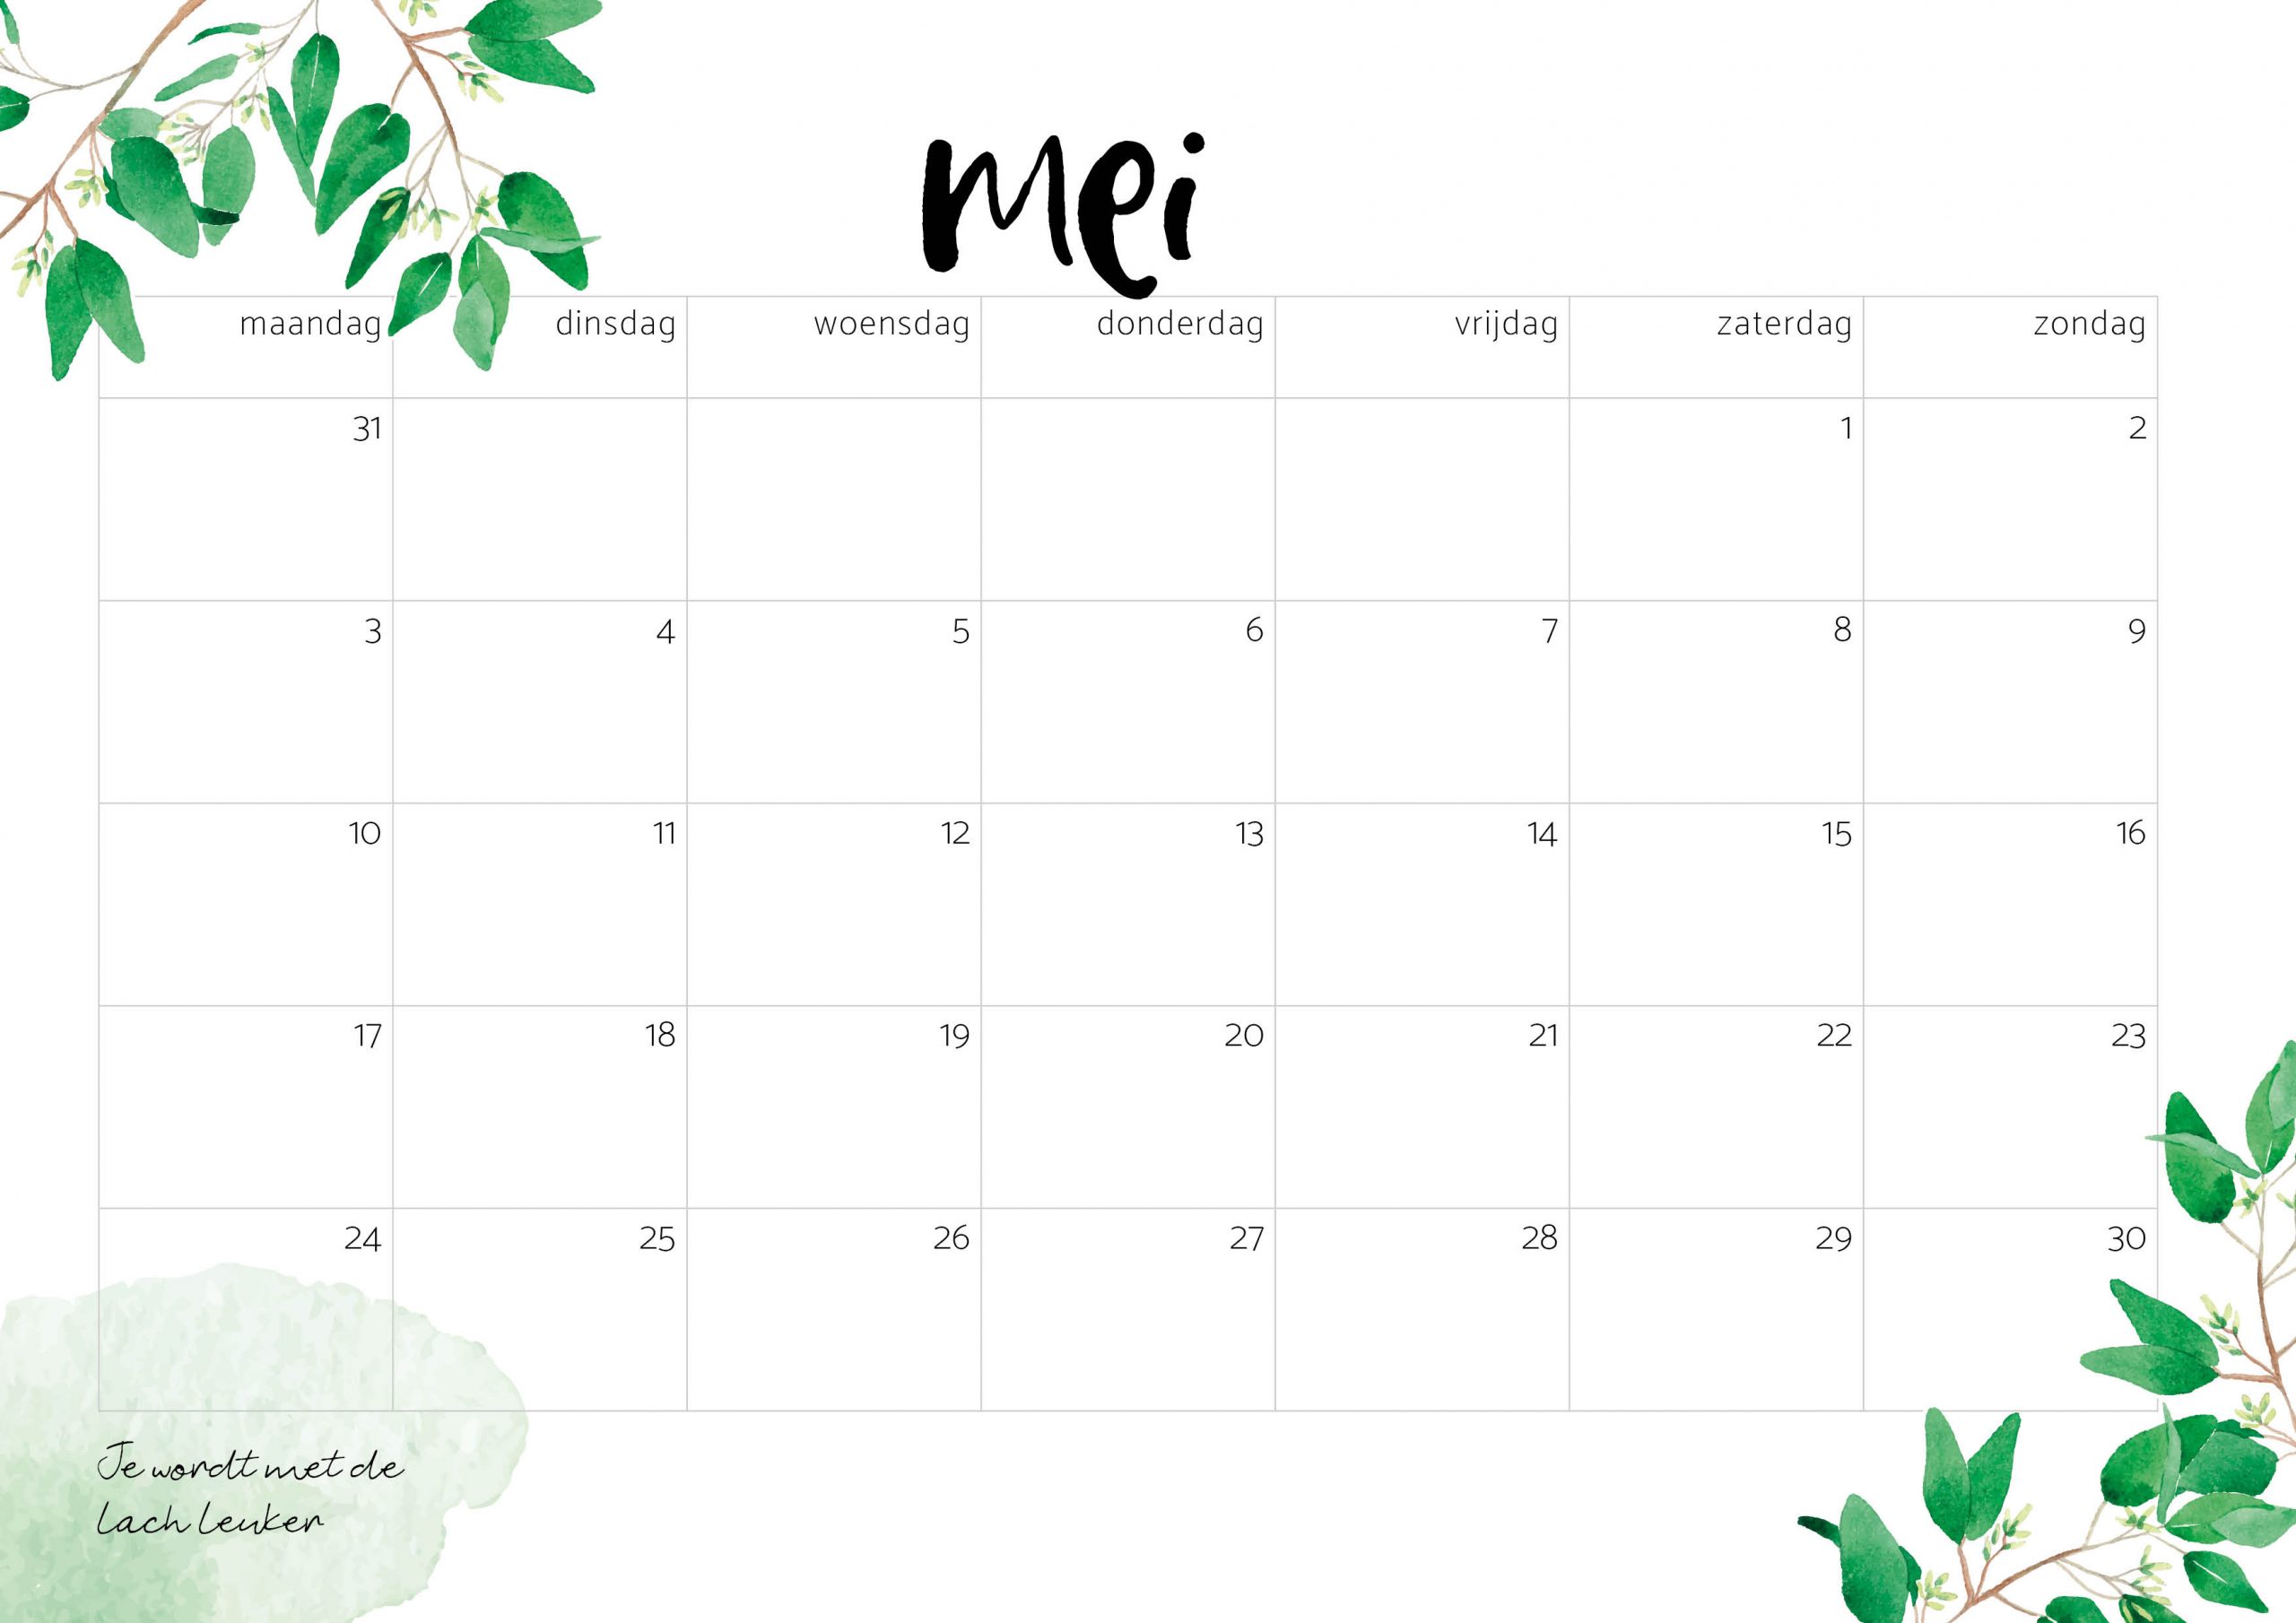 Hoopvol bouw Voordracht Free Printable kalender 2021 - Hip & Hot - blogazine